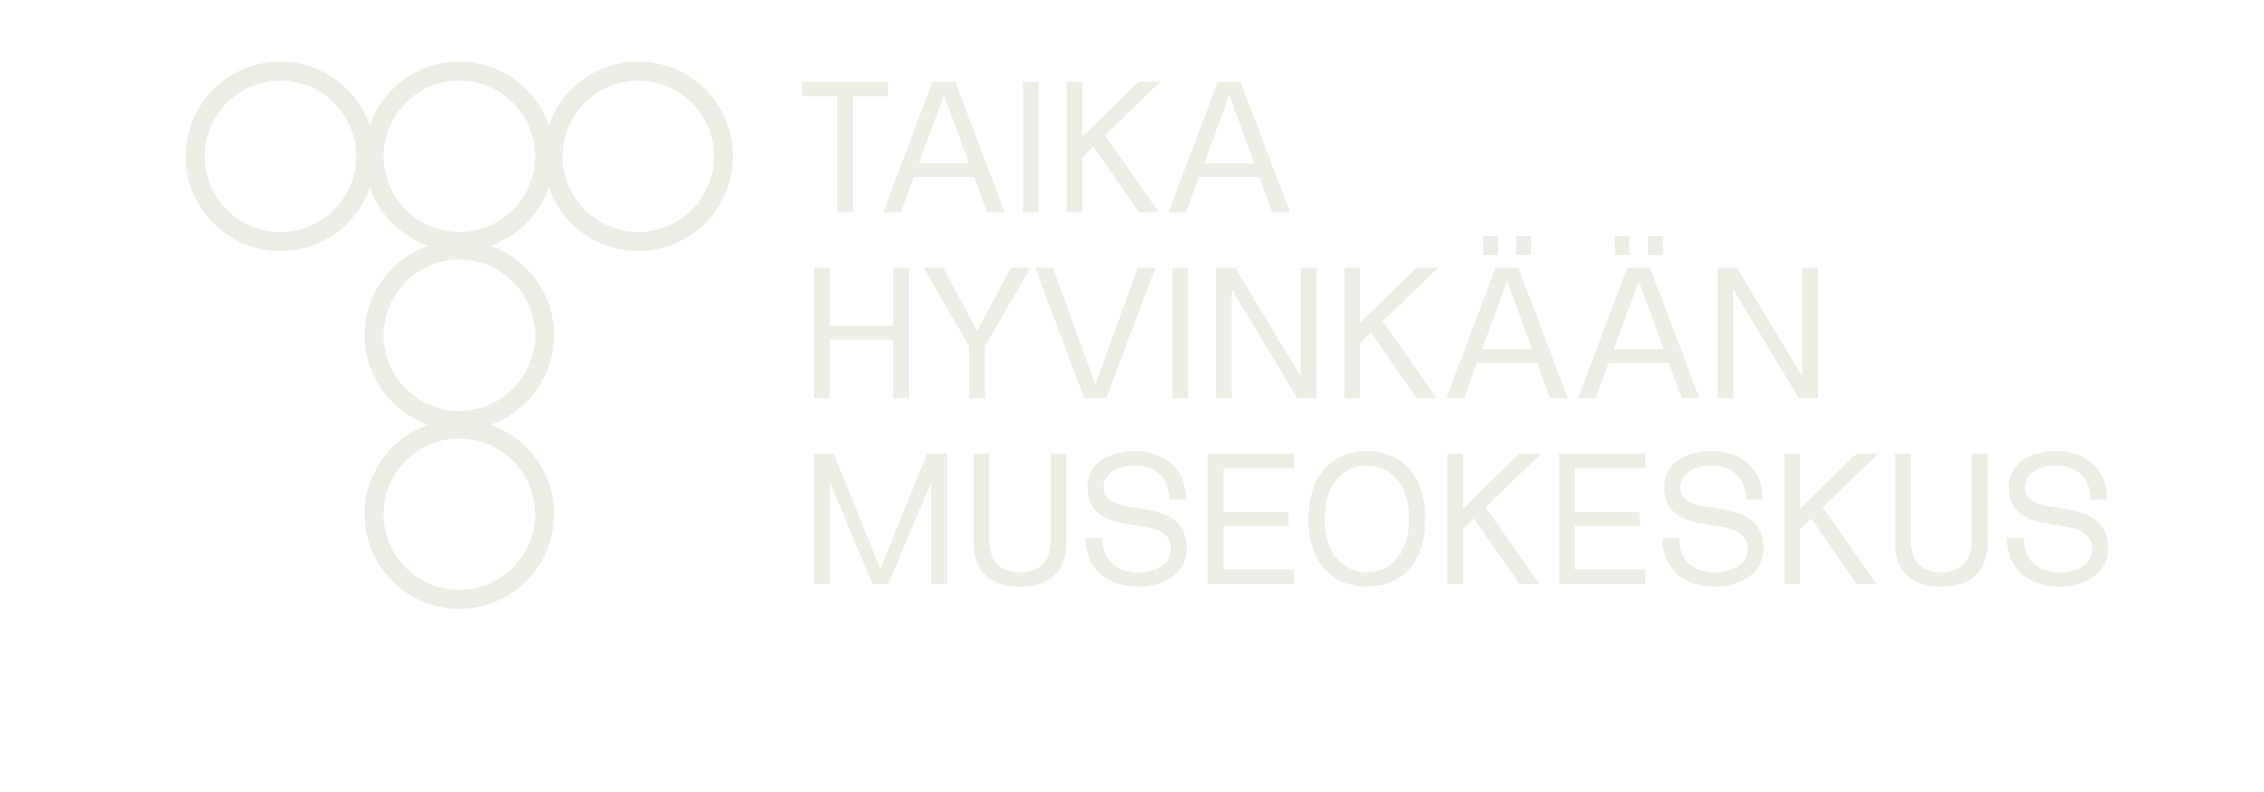 Hyvinkaan_museokeskus_multilogo_light_rgb.png